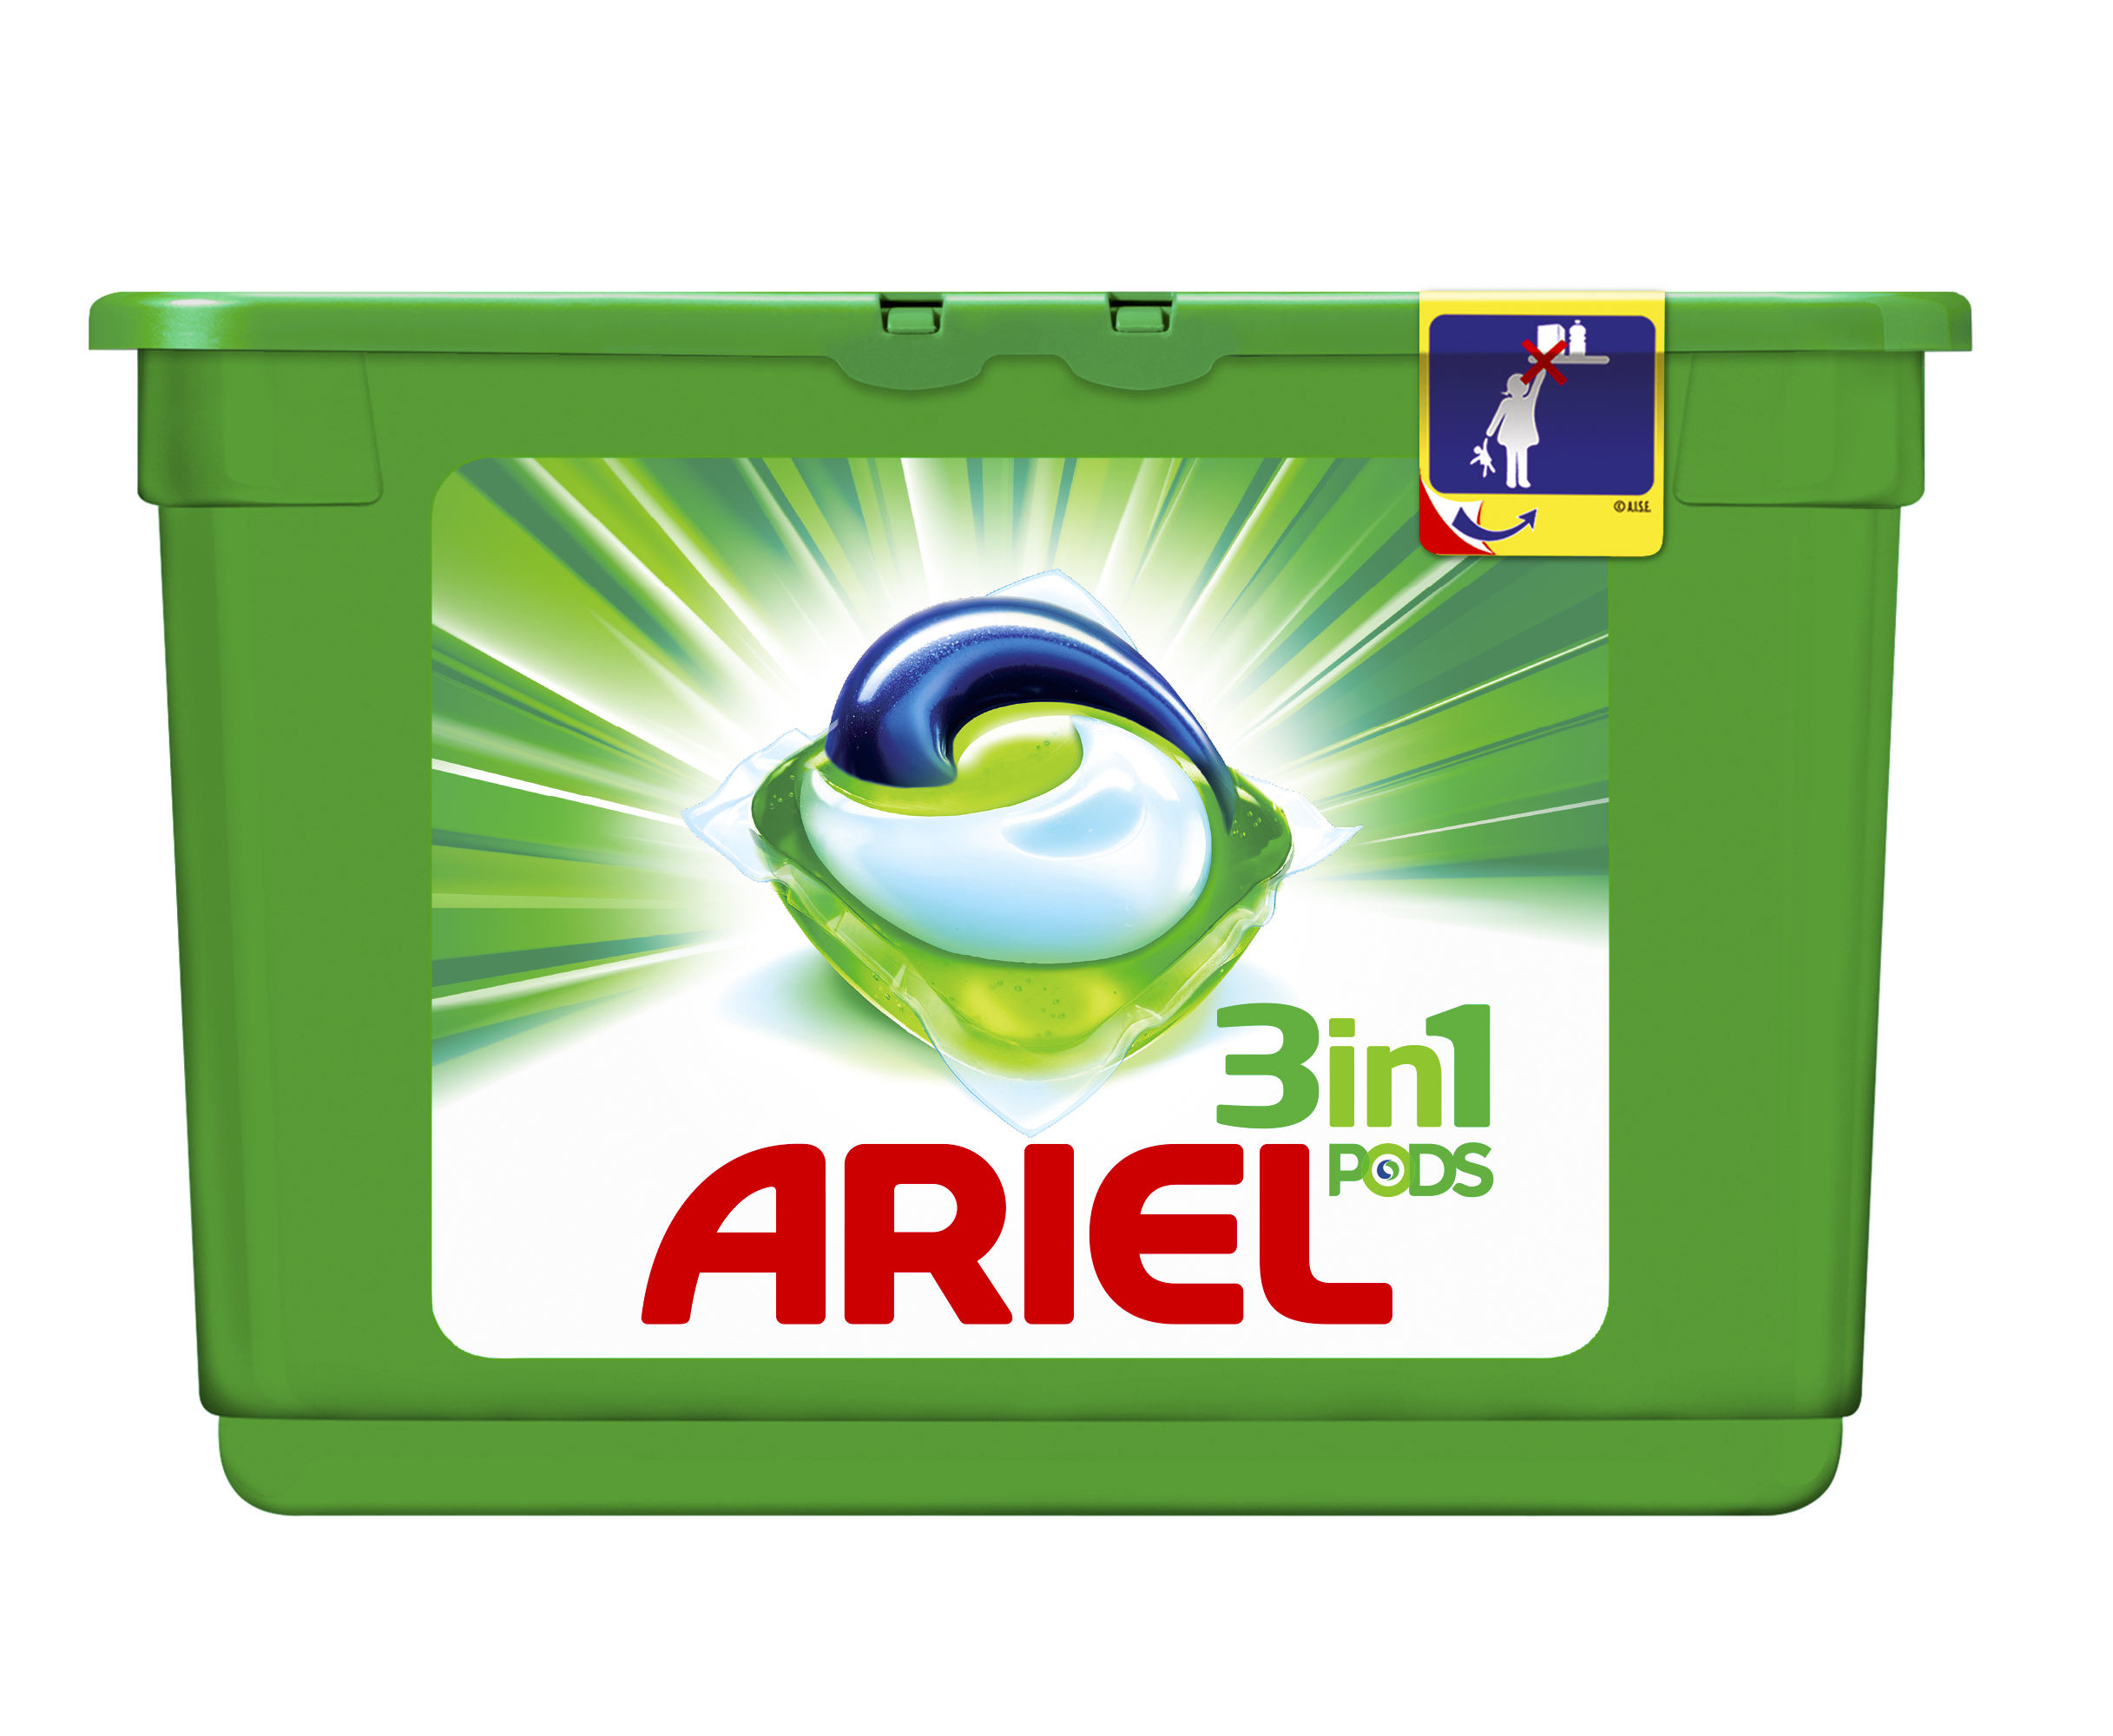 Ariel 3in1 Pods, Ariel - Avis et Tests internautes - aufeminin